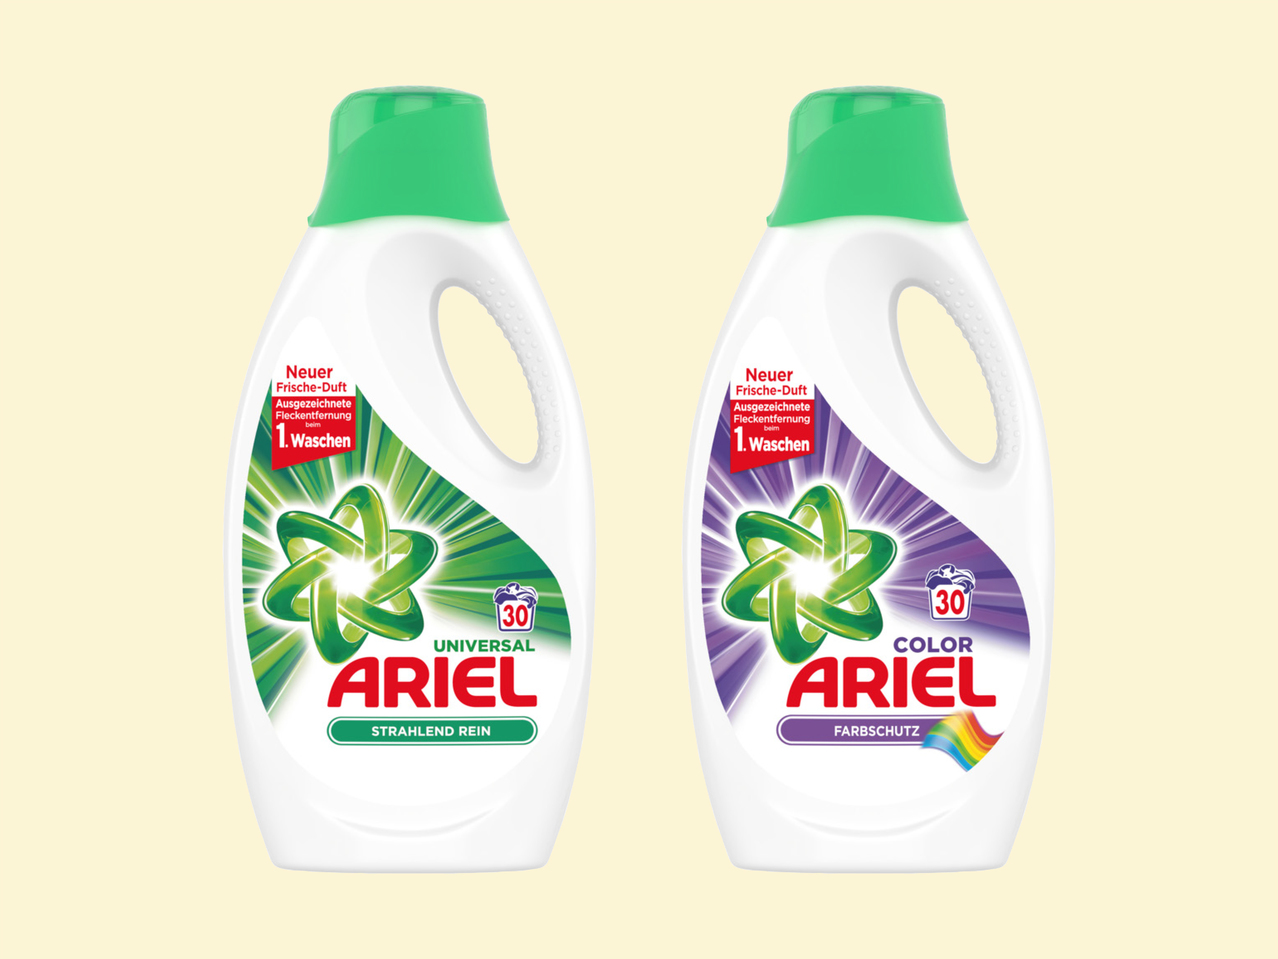 Ariel Flüssigwaschmittel Universal/ Color